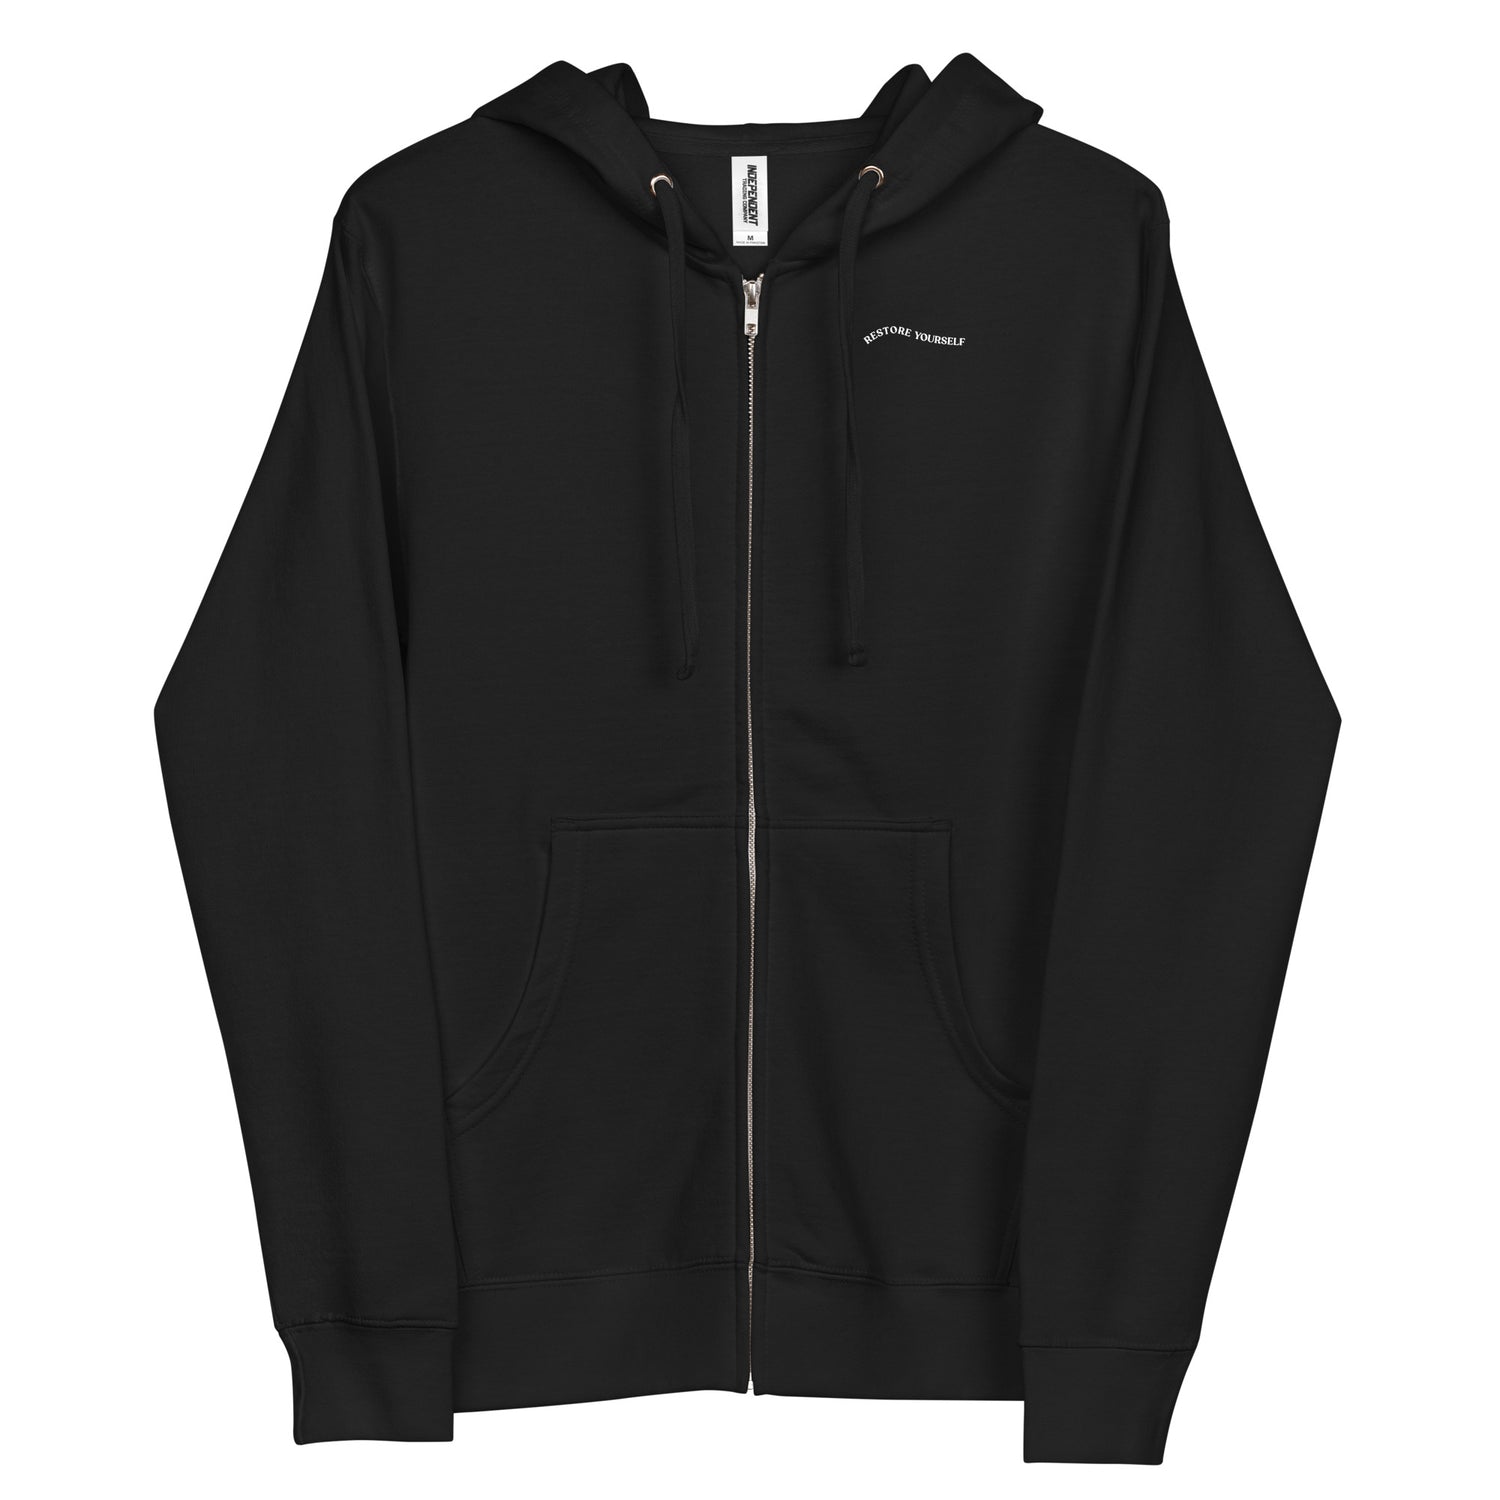 Black zip up hoodie that helps with mental health "Restore yourself".